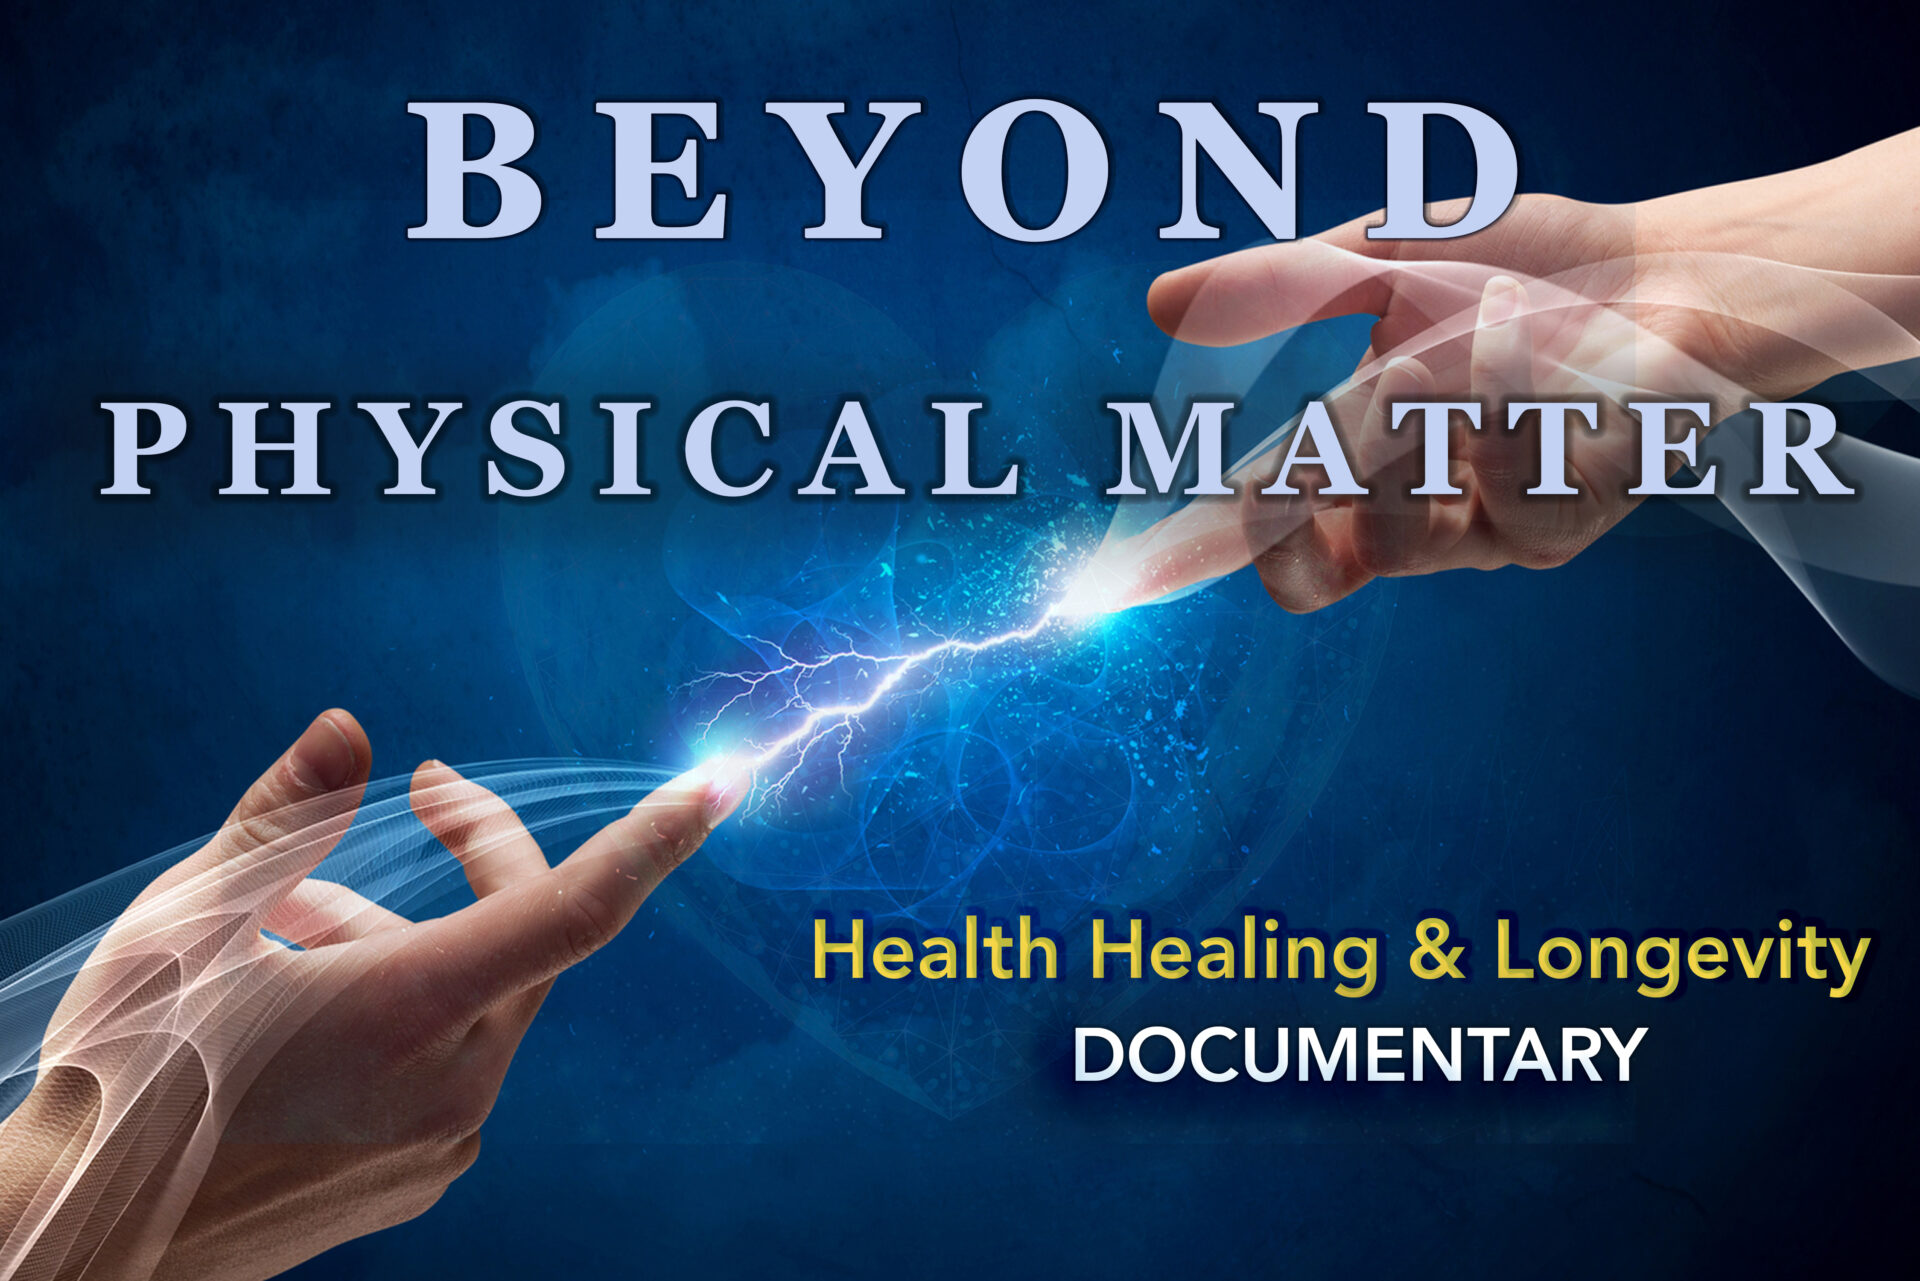 Beyond Physical Matter<br />
